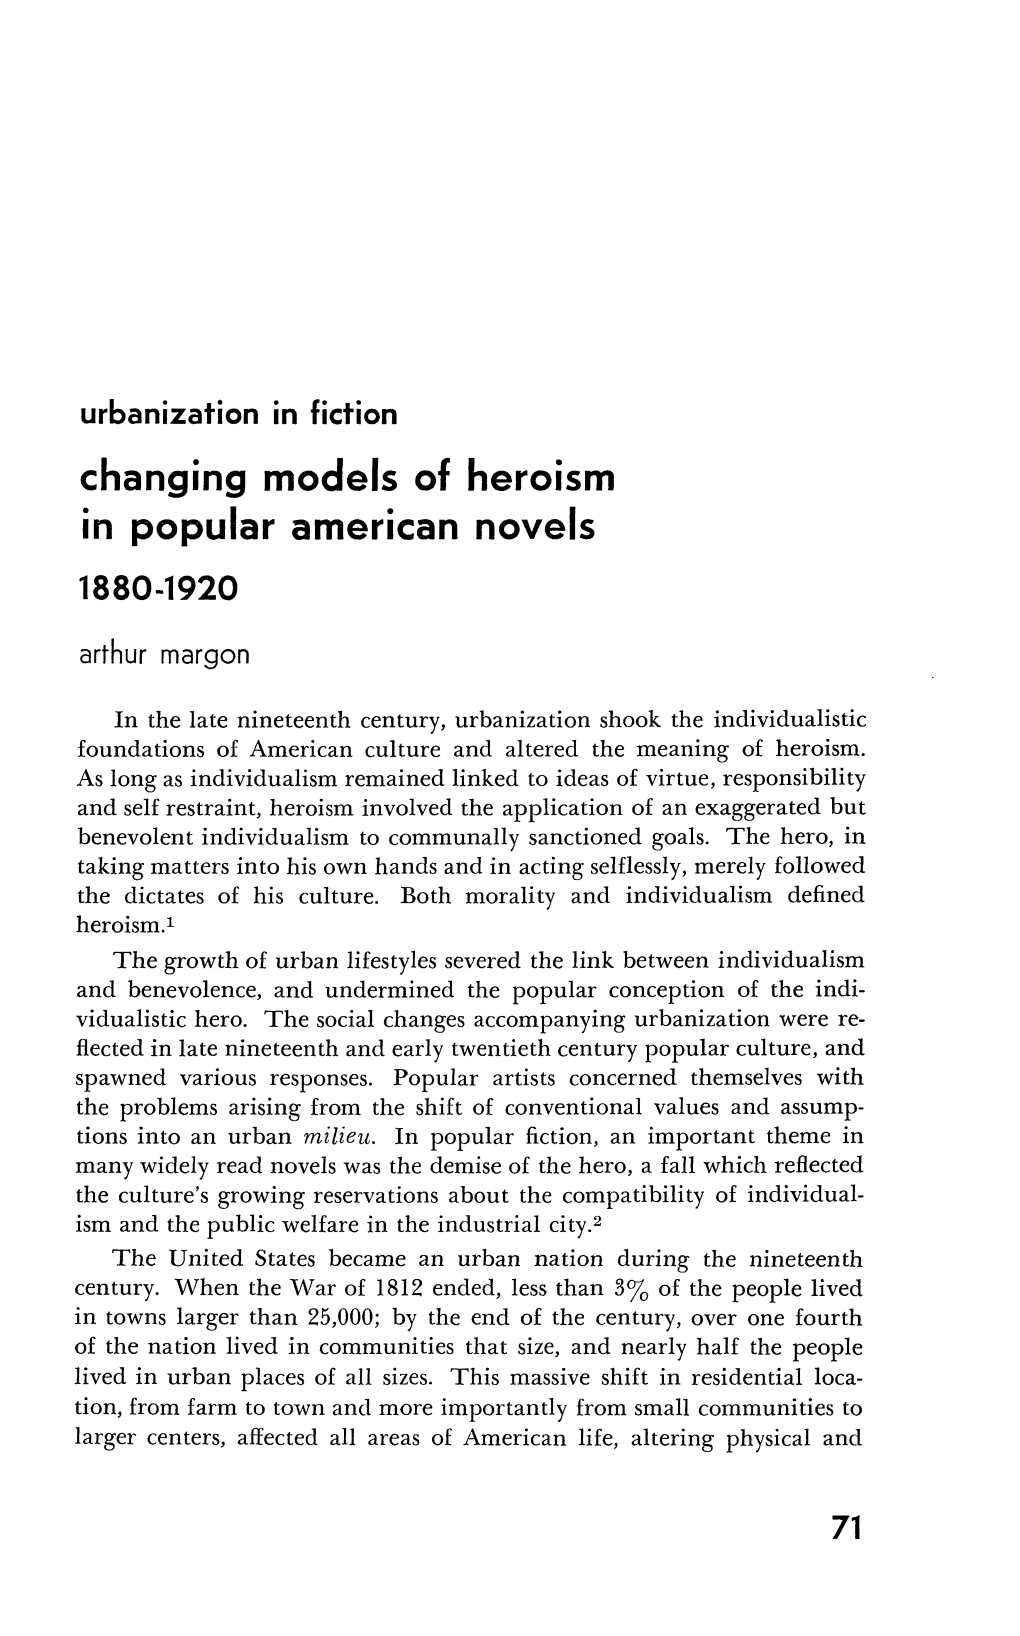 Changing Models of Heroism in Popular American Novels 1880-1920 Arthur Margon